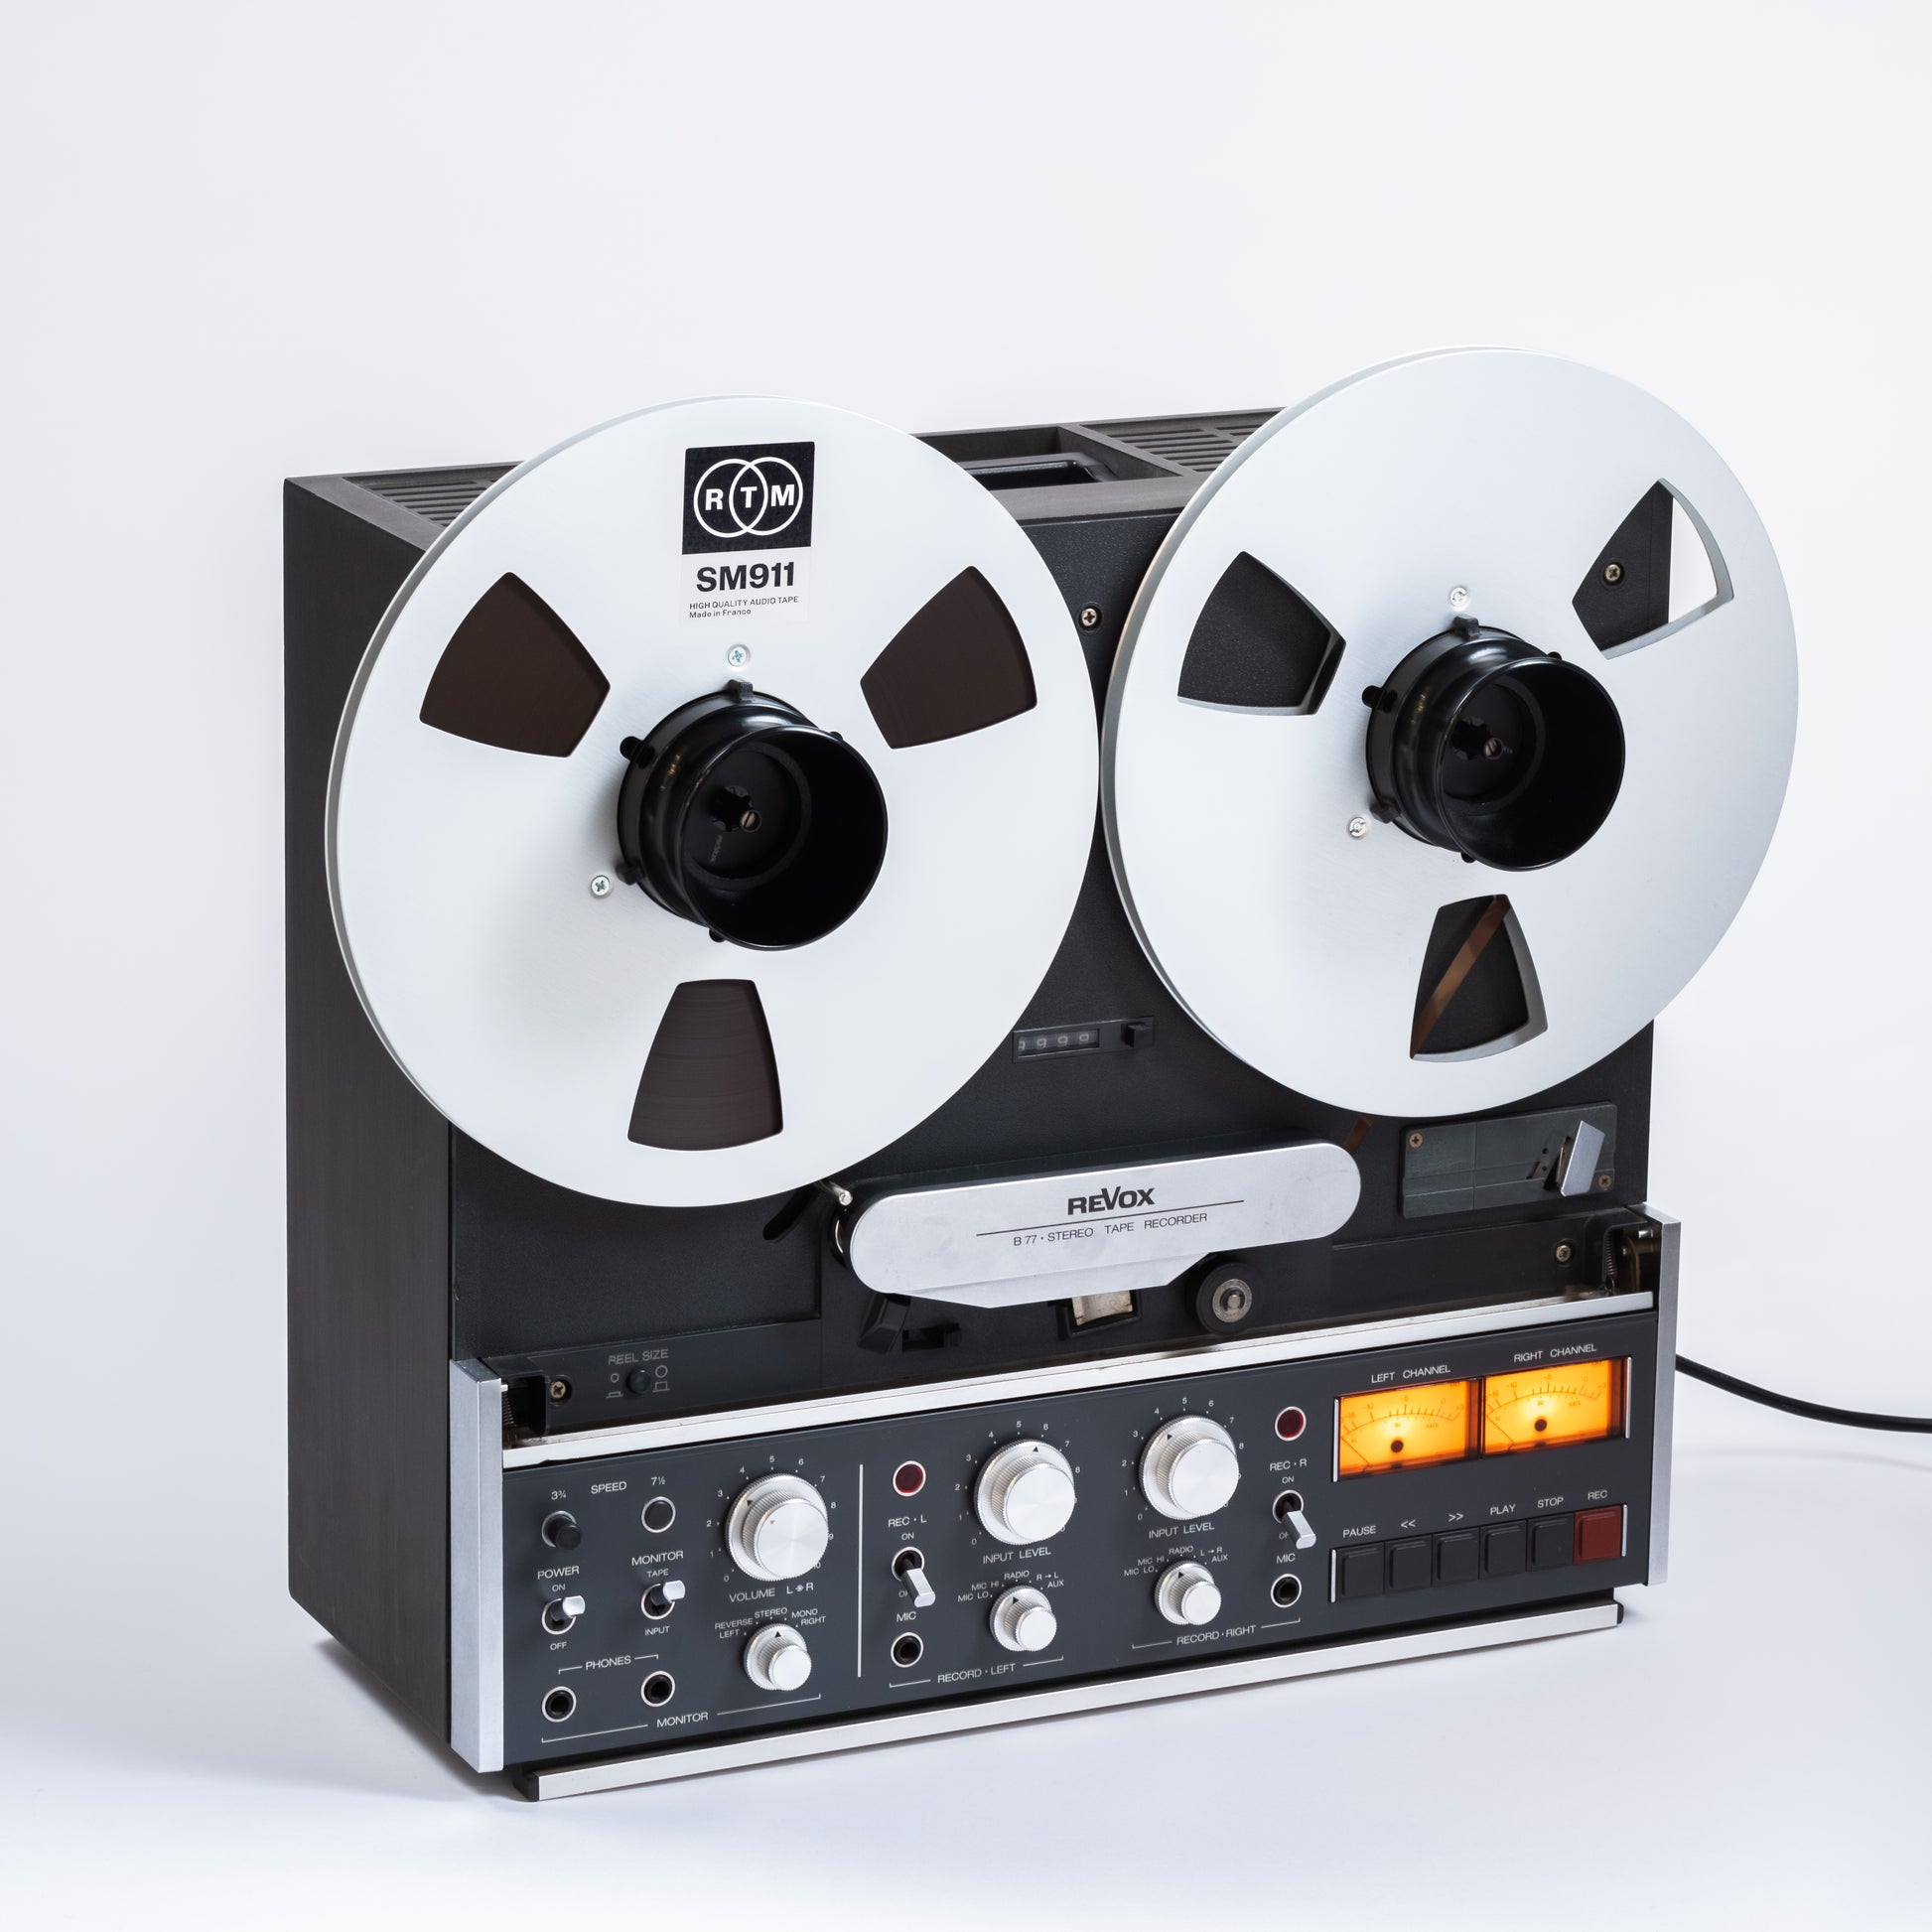 RTM SM911 1/2 premium high output studio & archive magnetic audio